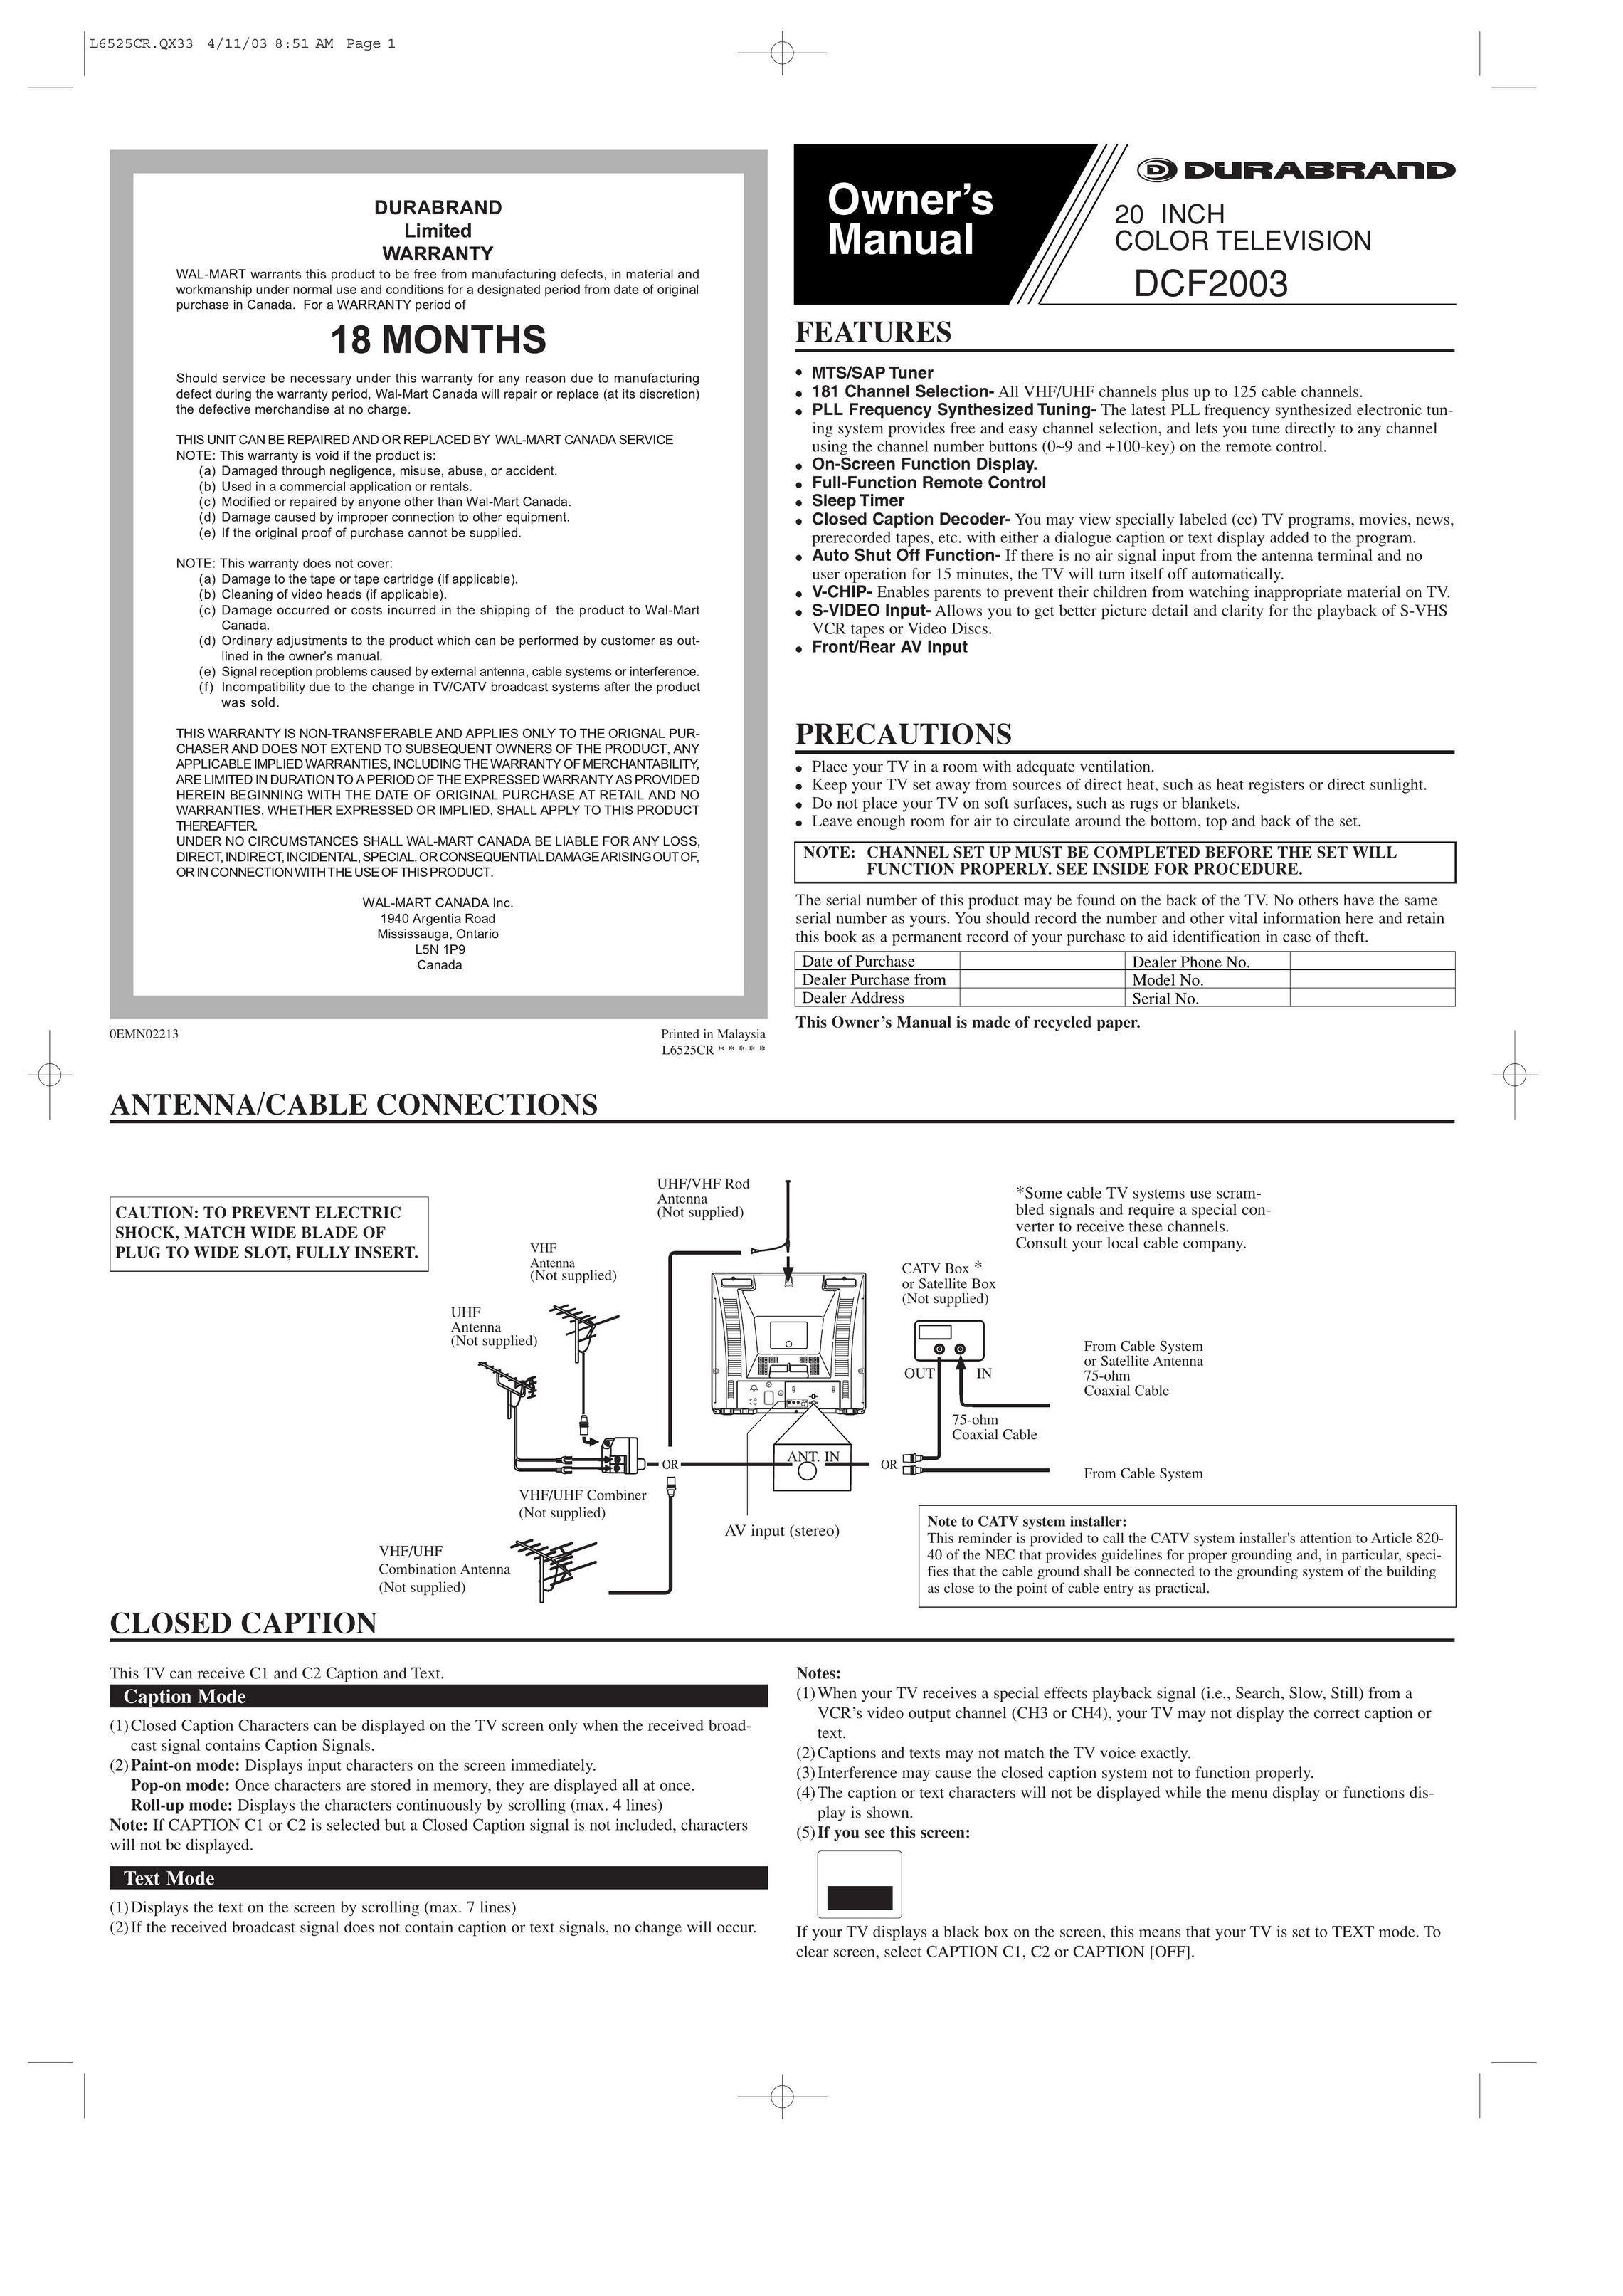 Durabrand DCF2003 CRT Television User Manual